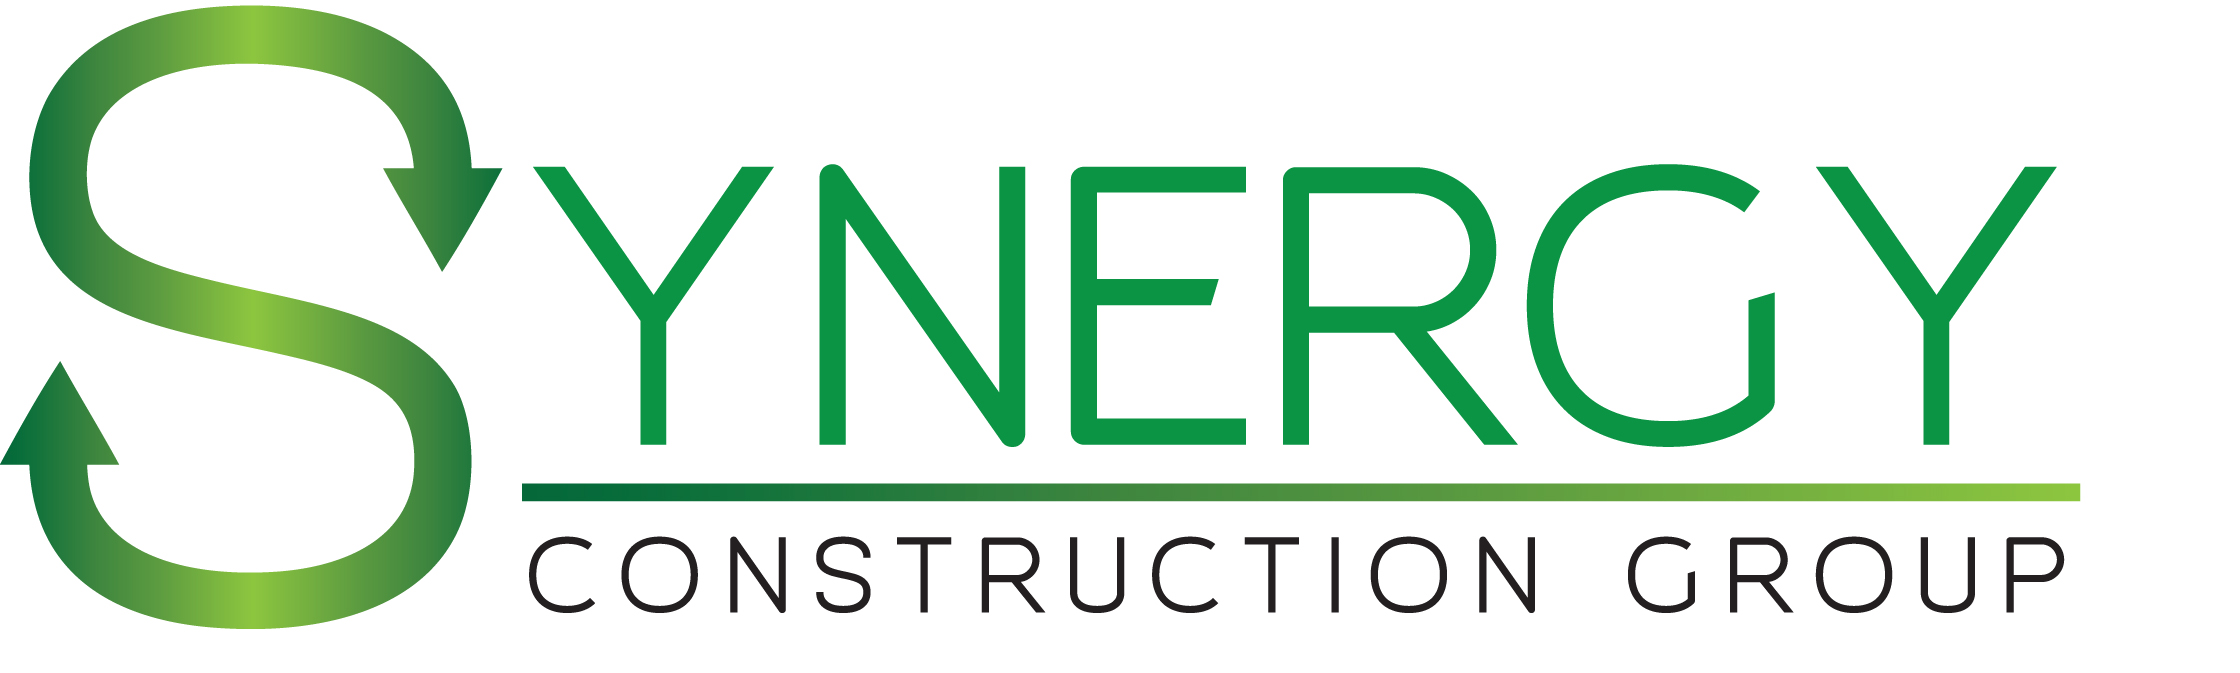 Synergy Construction Group, LLC Logo